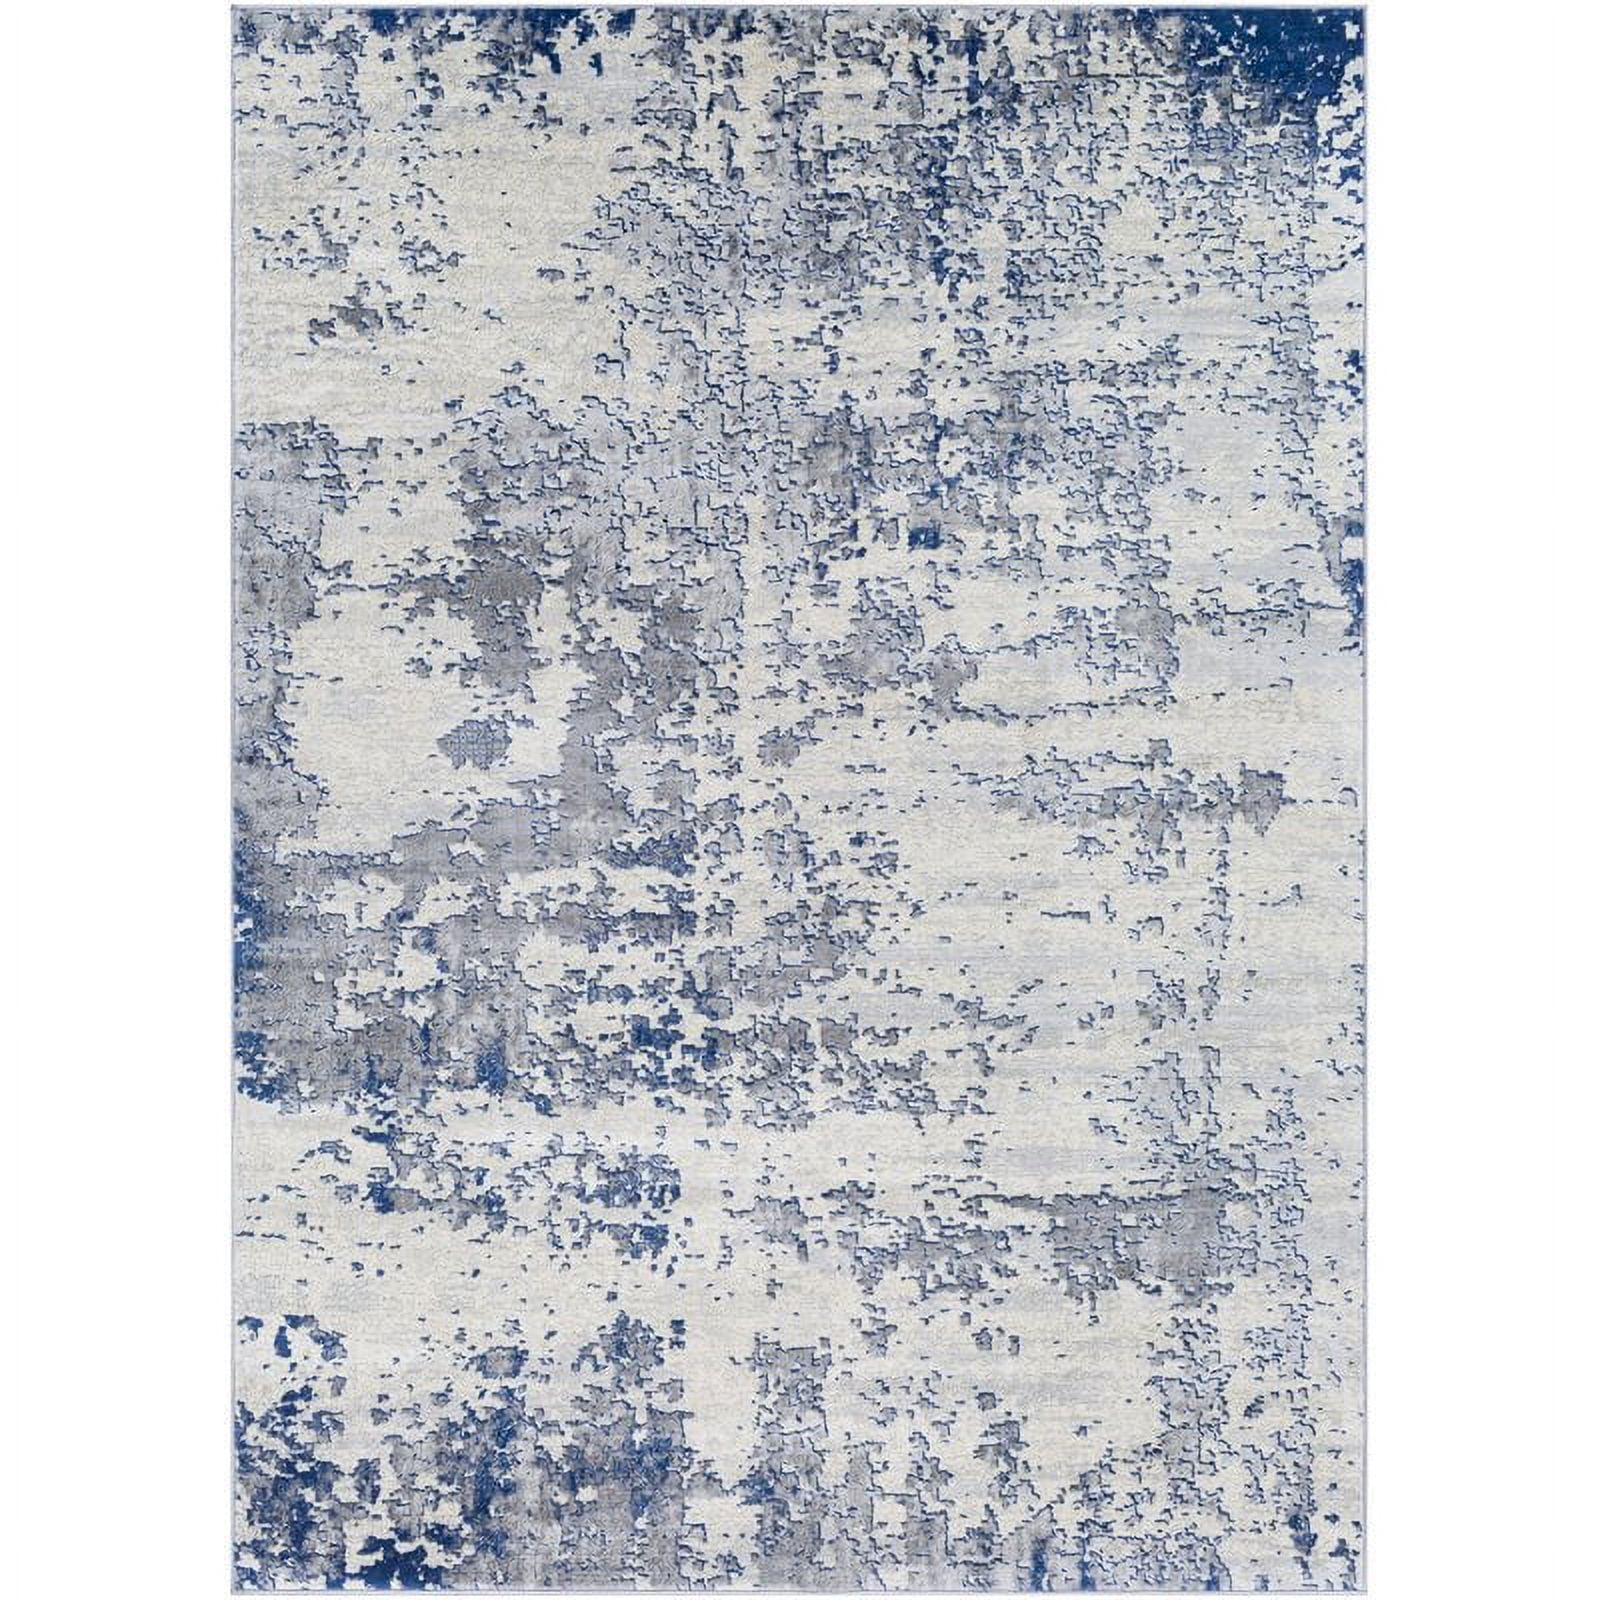 SÖDERSJÖN Bath mat, gray-turquoise, 20x31 - IKEA